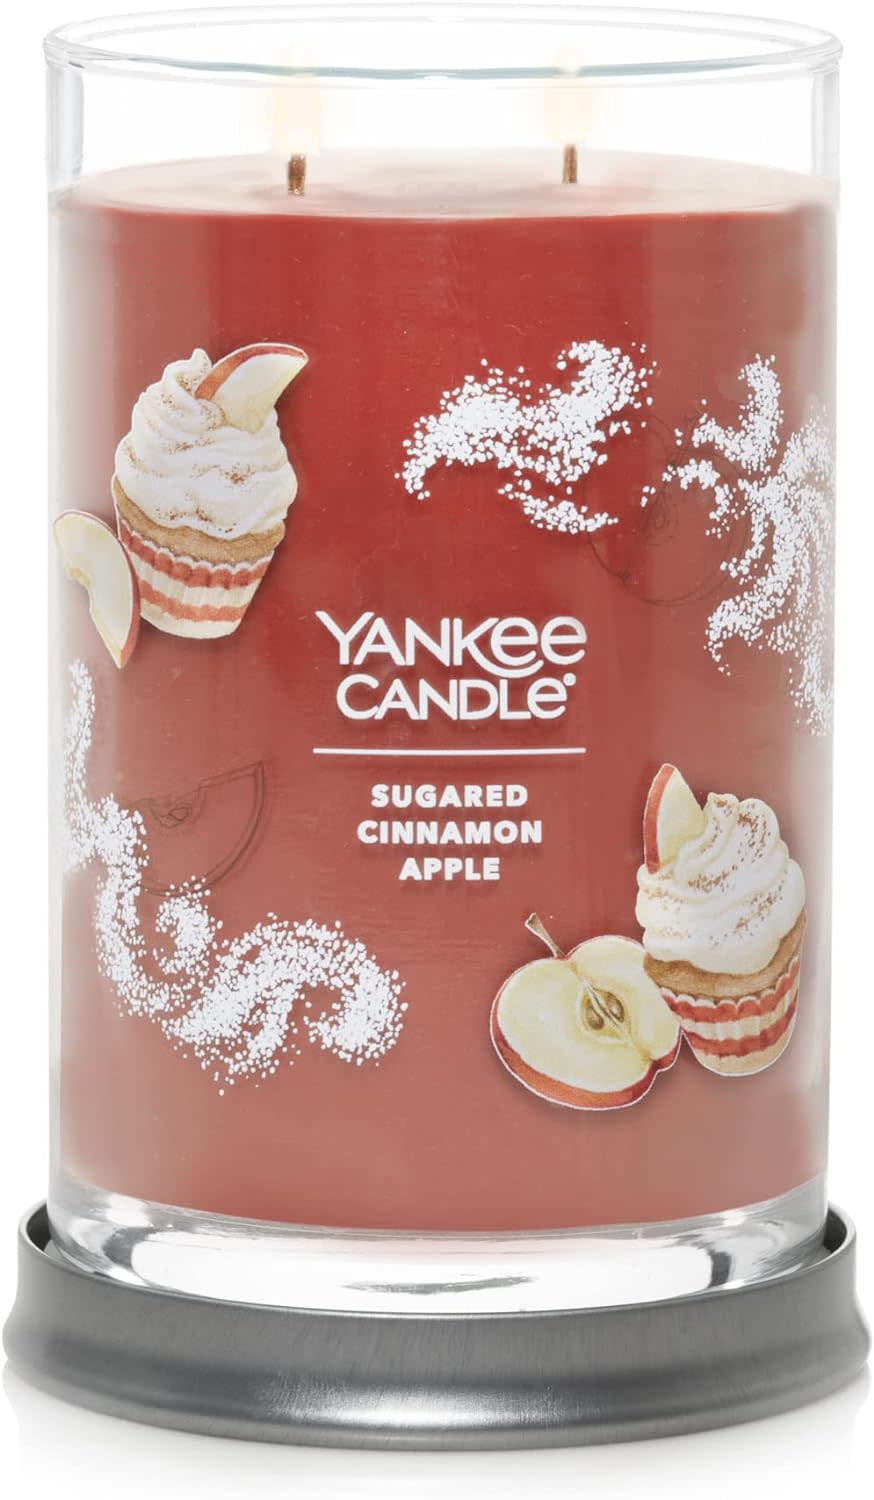 Yankee Candle Sugared Cinnamon Apple